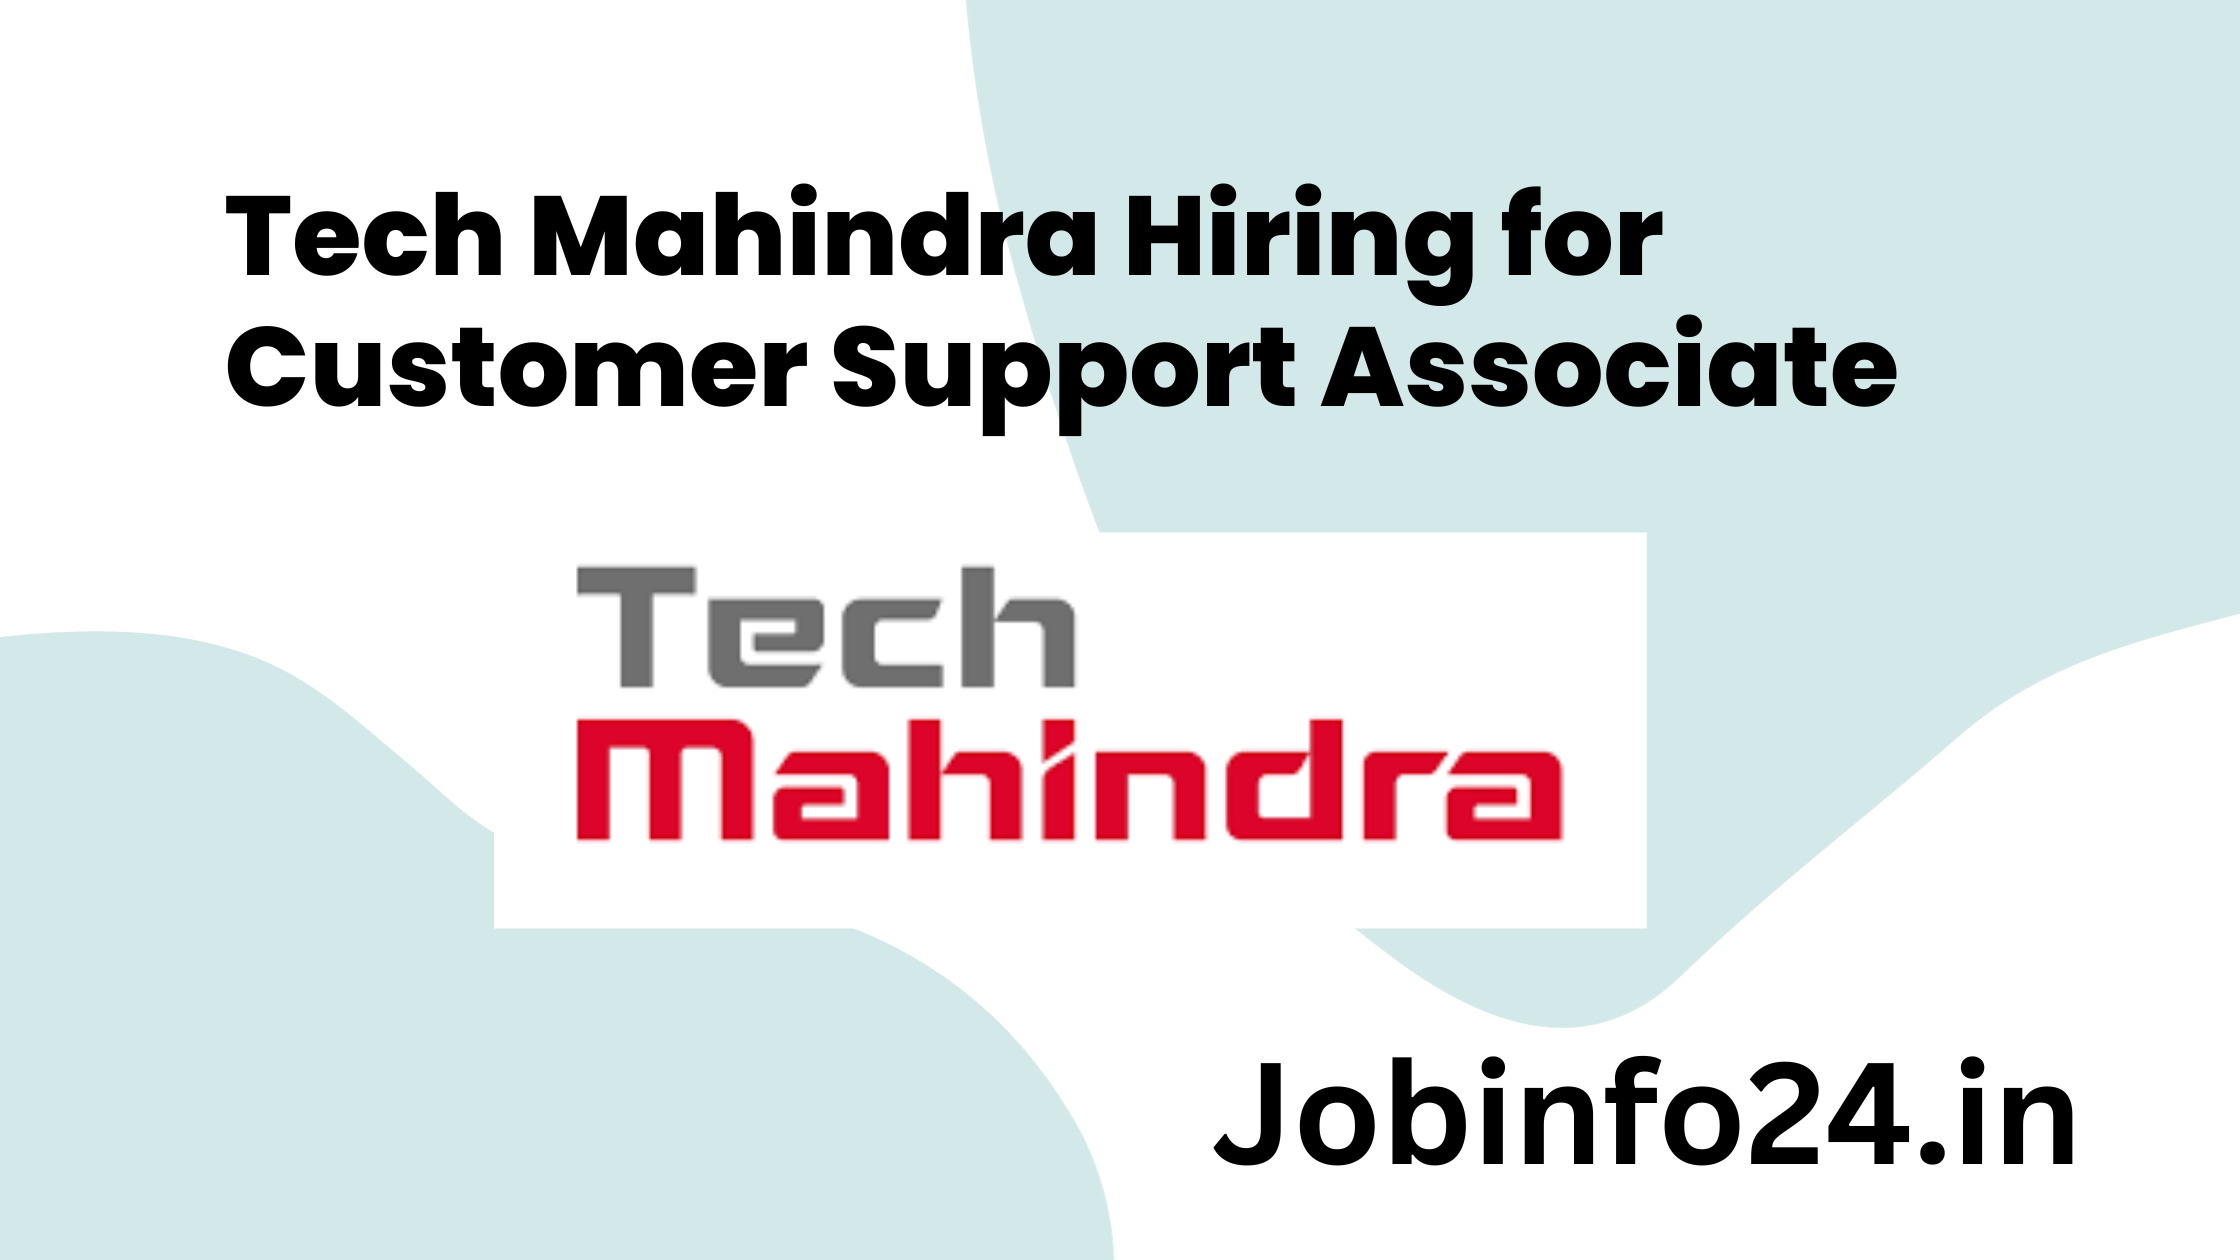 Tech Mahindra Hiring for Customer Support Associate